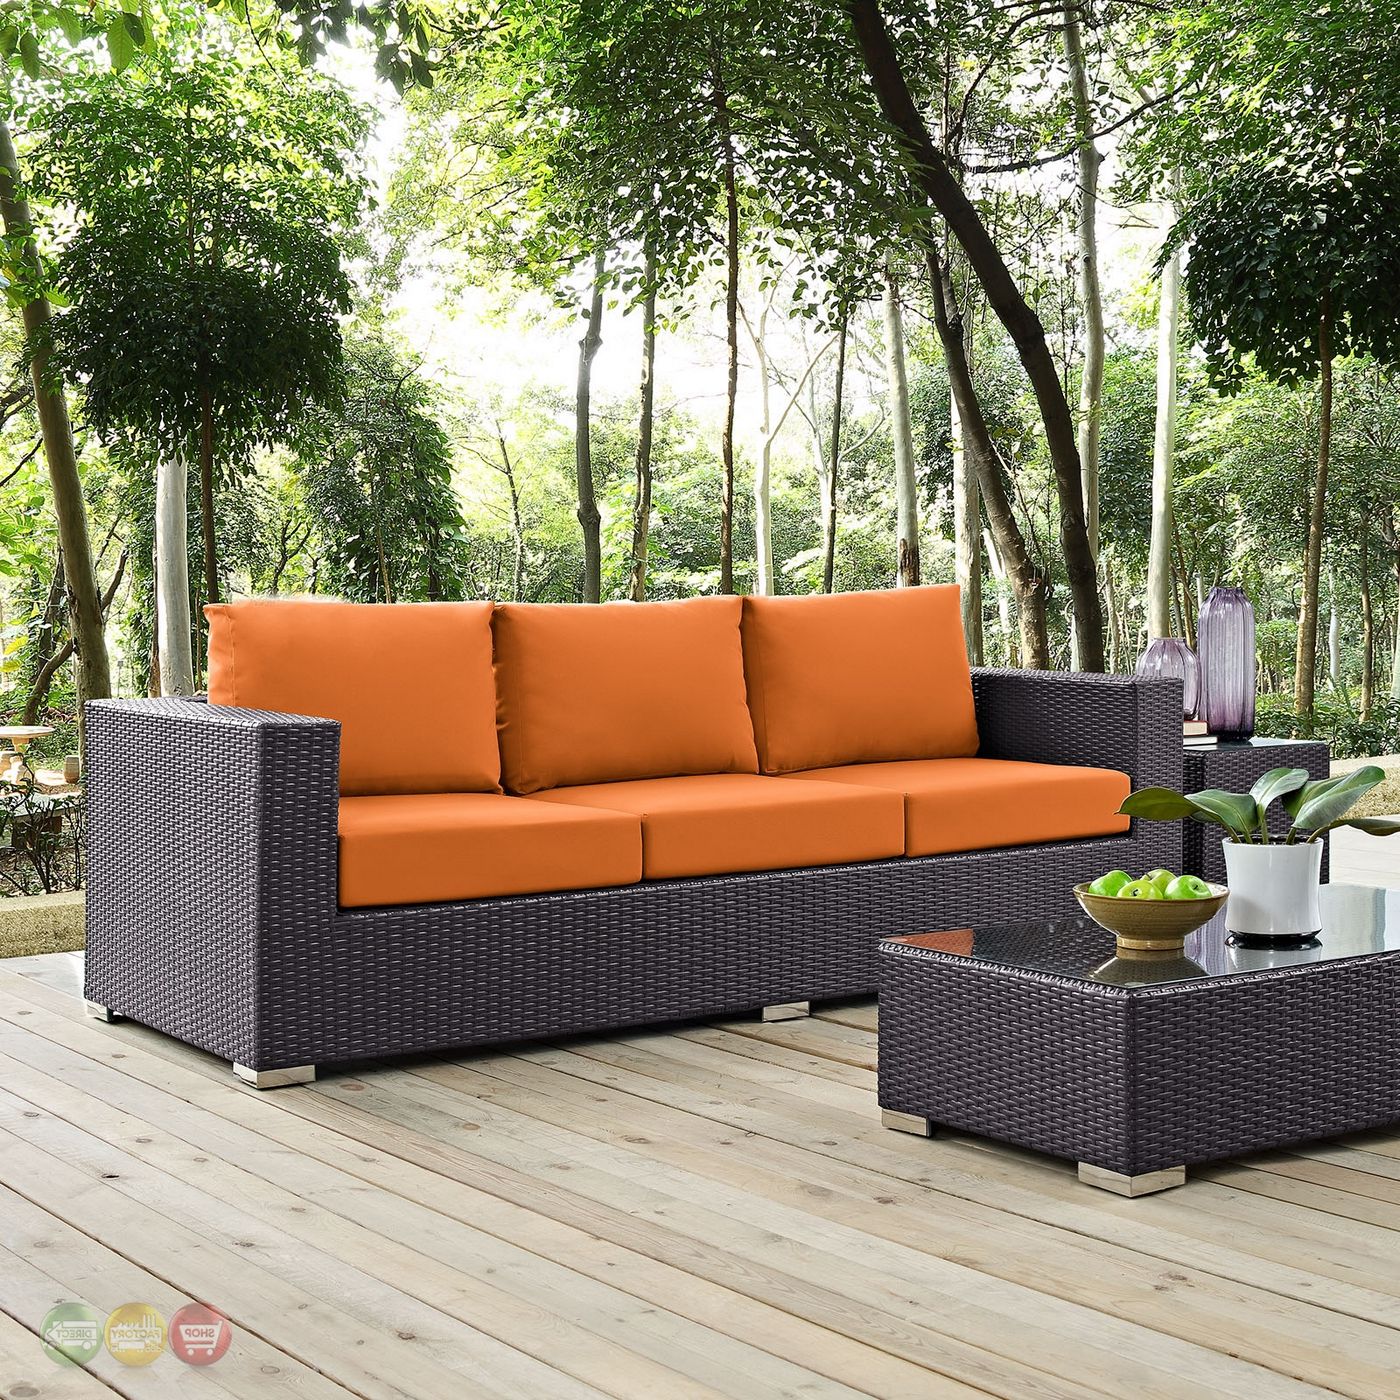 Outdoor Wicker Orange Cushion Patio Sets With Regard To Popular Convene Modular Rattan Outdoor Patio Sofa W/ Cushions, Espresso Orange (View 6 of 15)